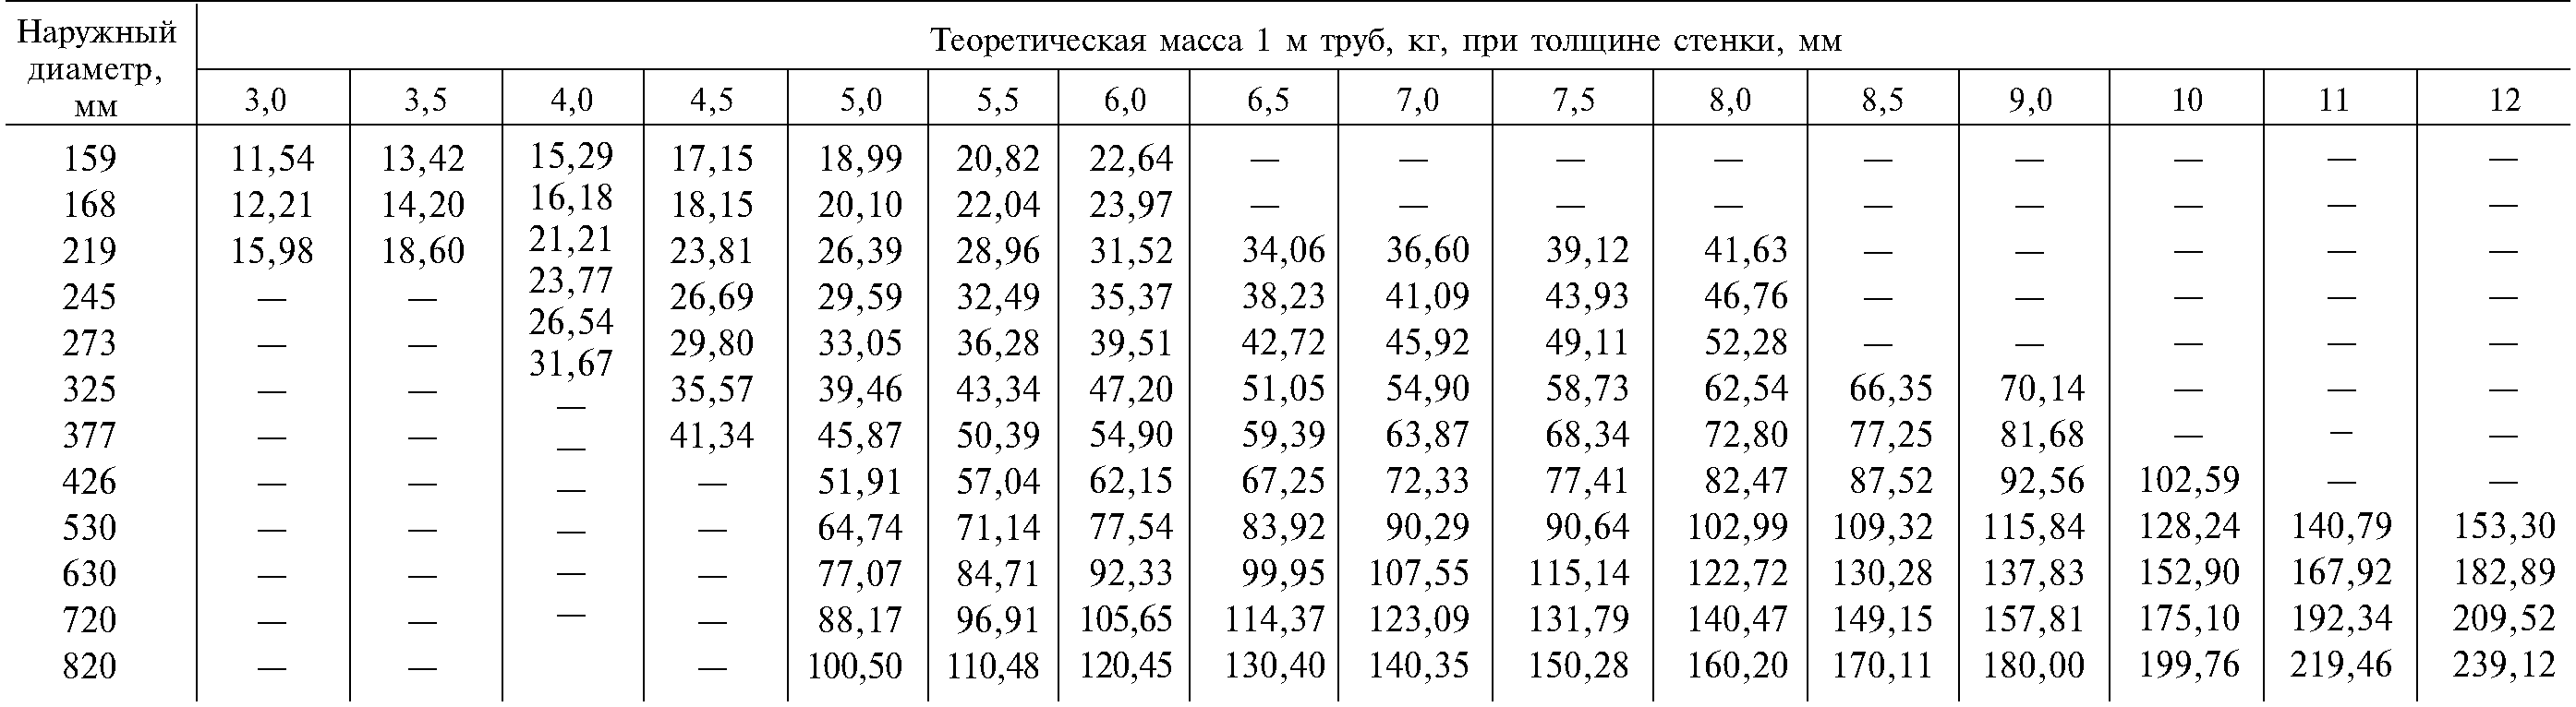 Трубный калькулятор для расчета веса трубы онлайн :: protryby.ru